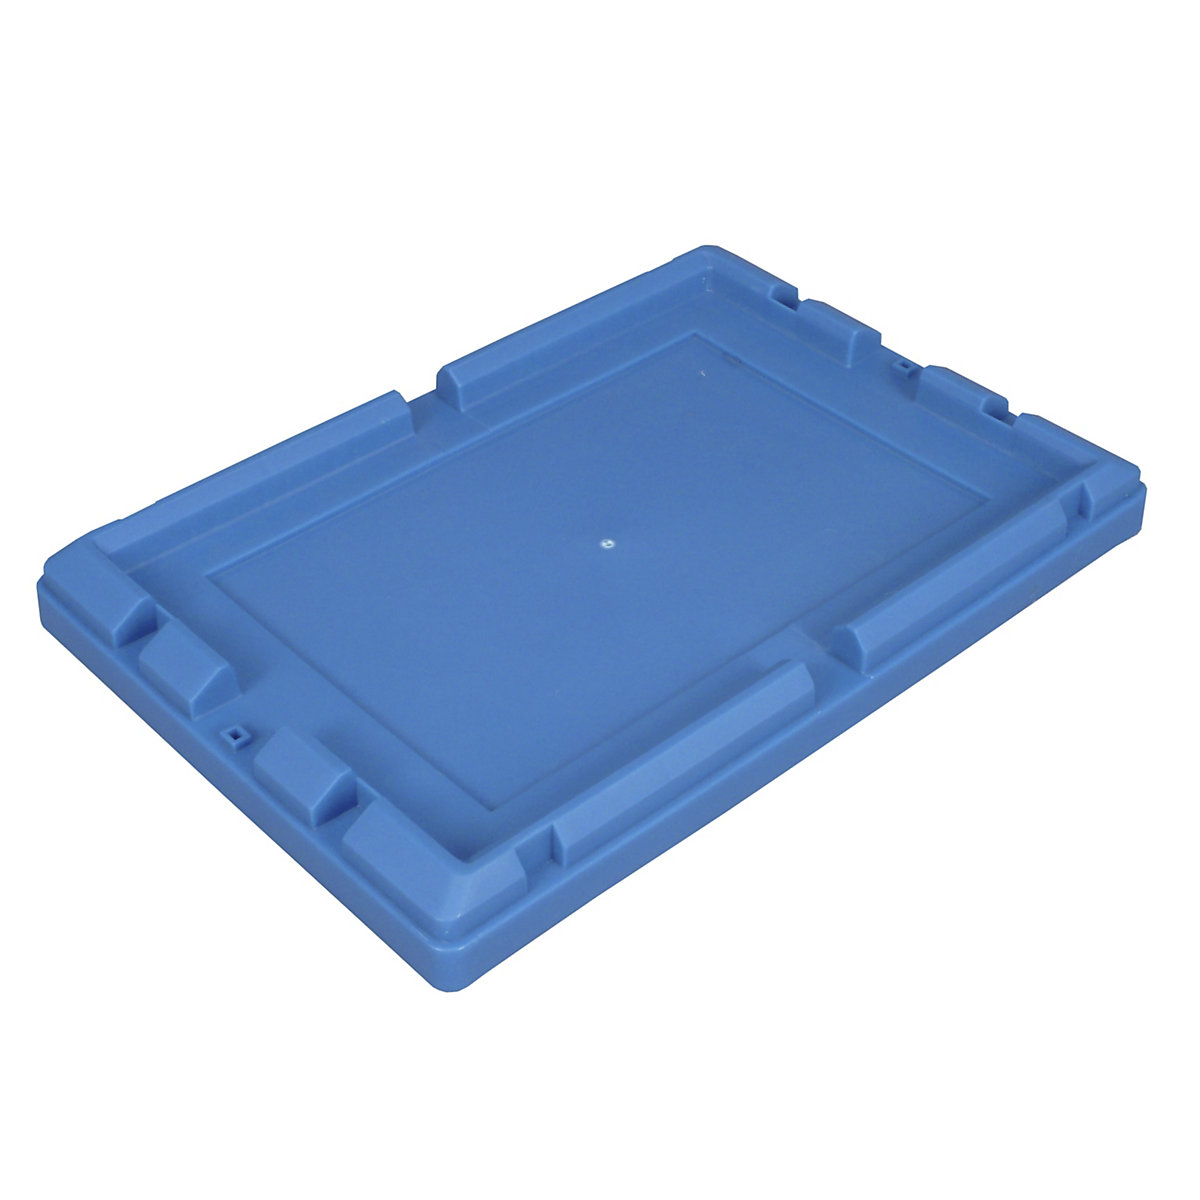 Tampa do recipiente, polipropileno, LxCxA 330 x 480 x 46,5 mm, embalagem de 4 unid., azul-1